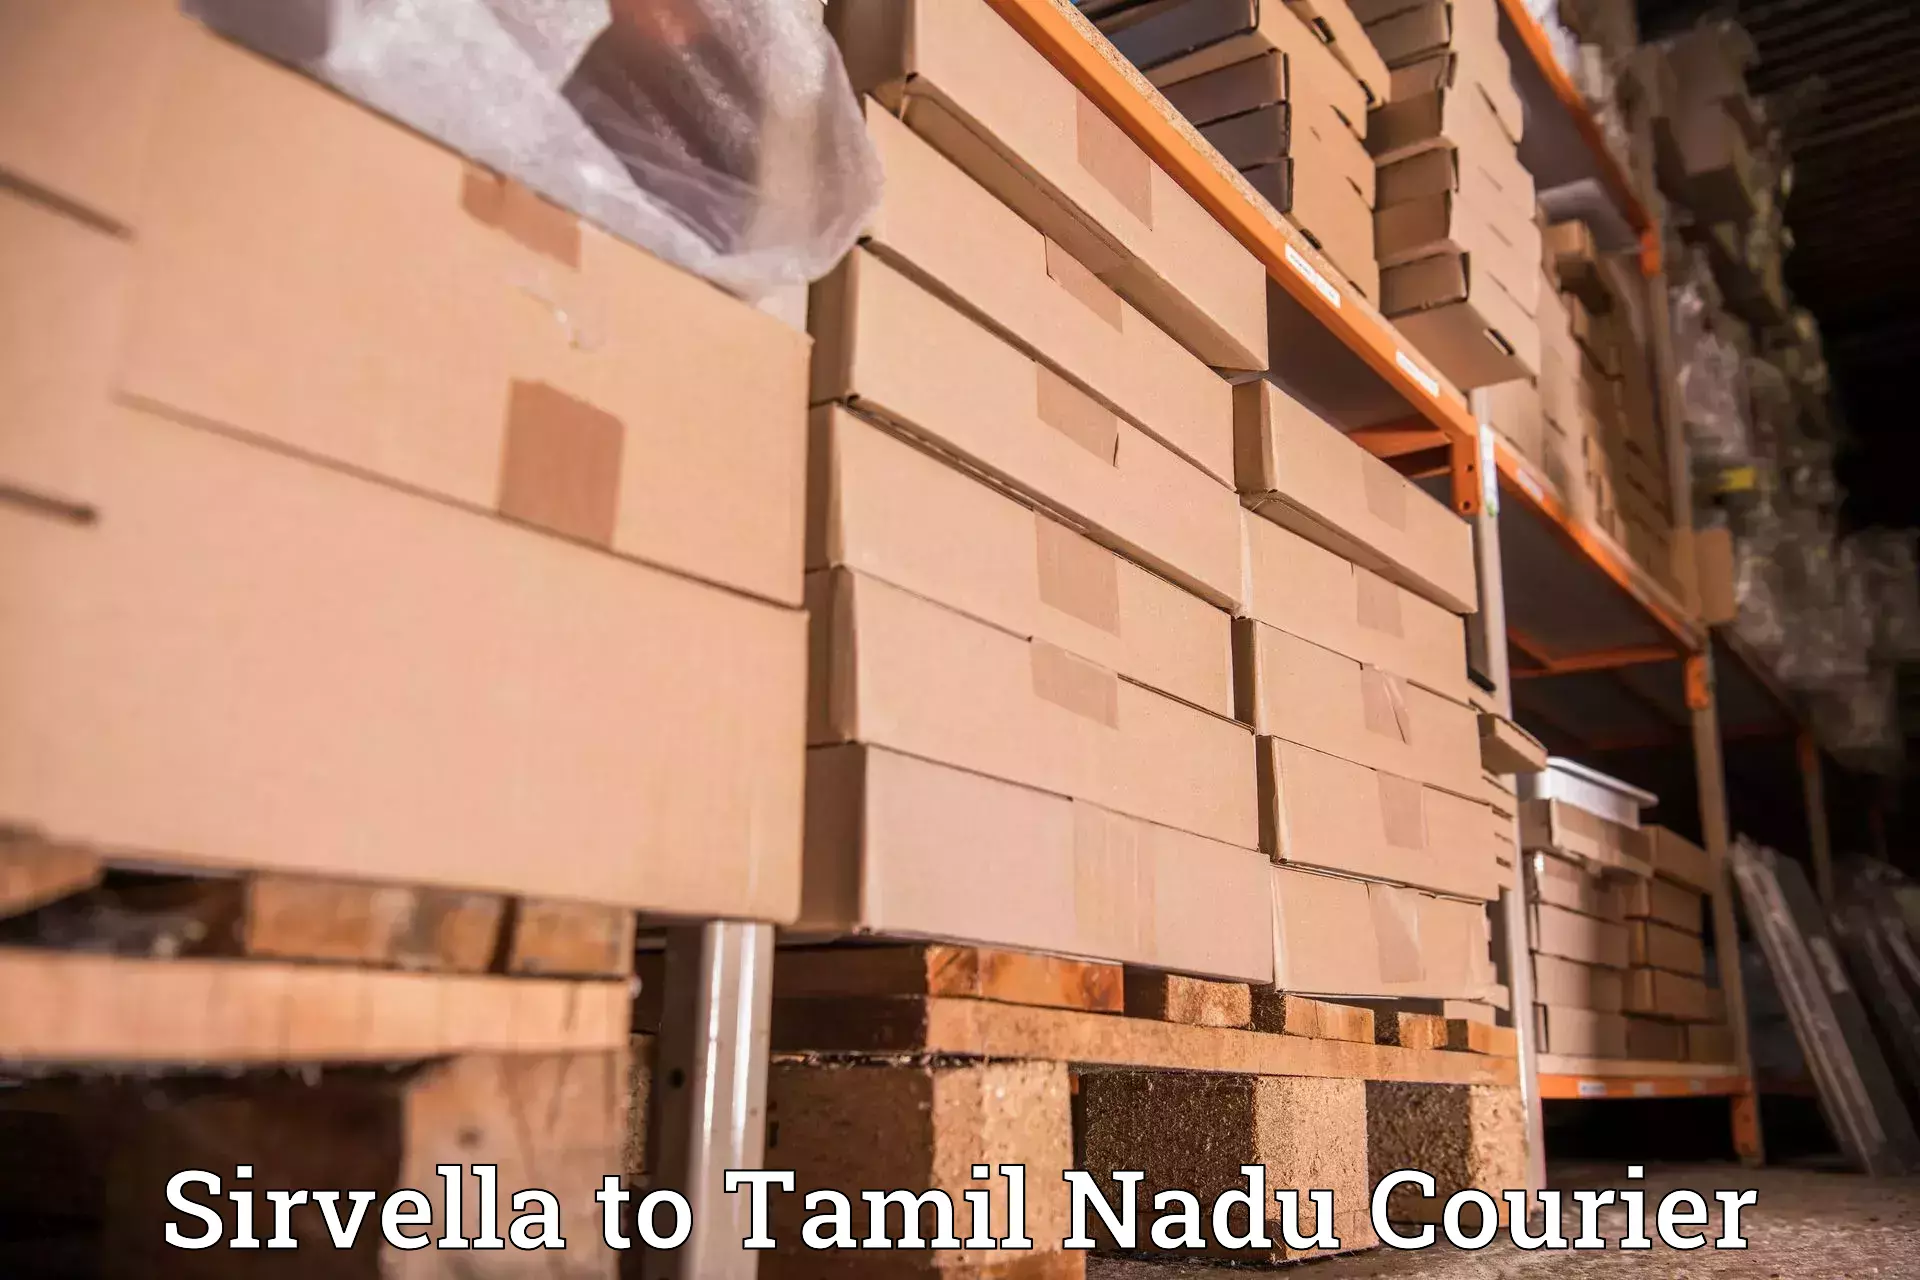 Personalized courier experiences Sirvella to Tiruvannamalai